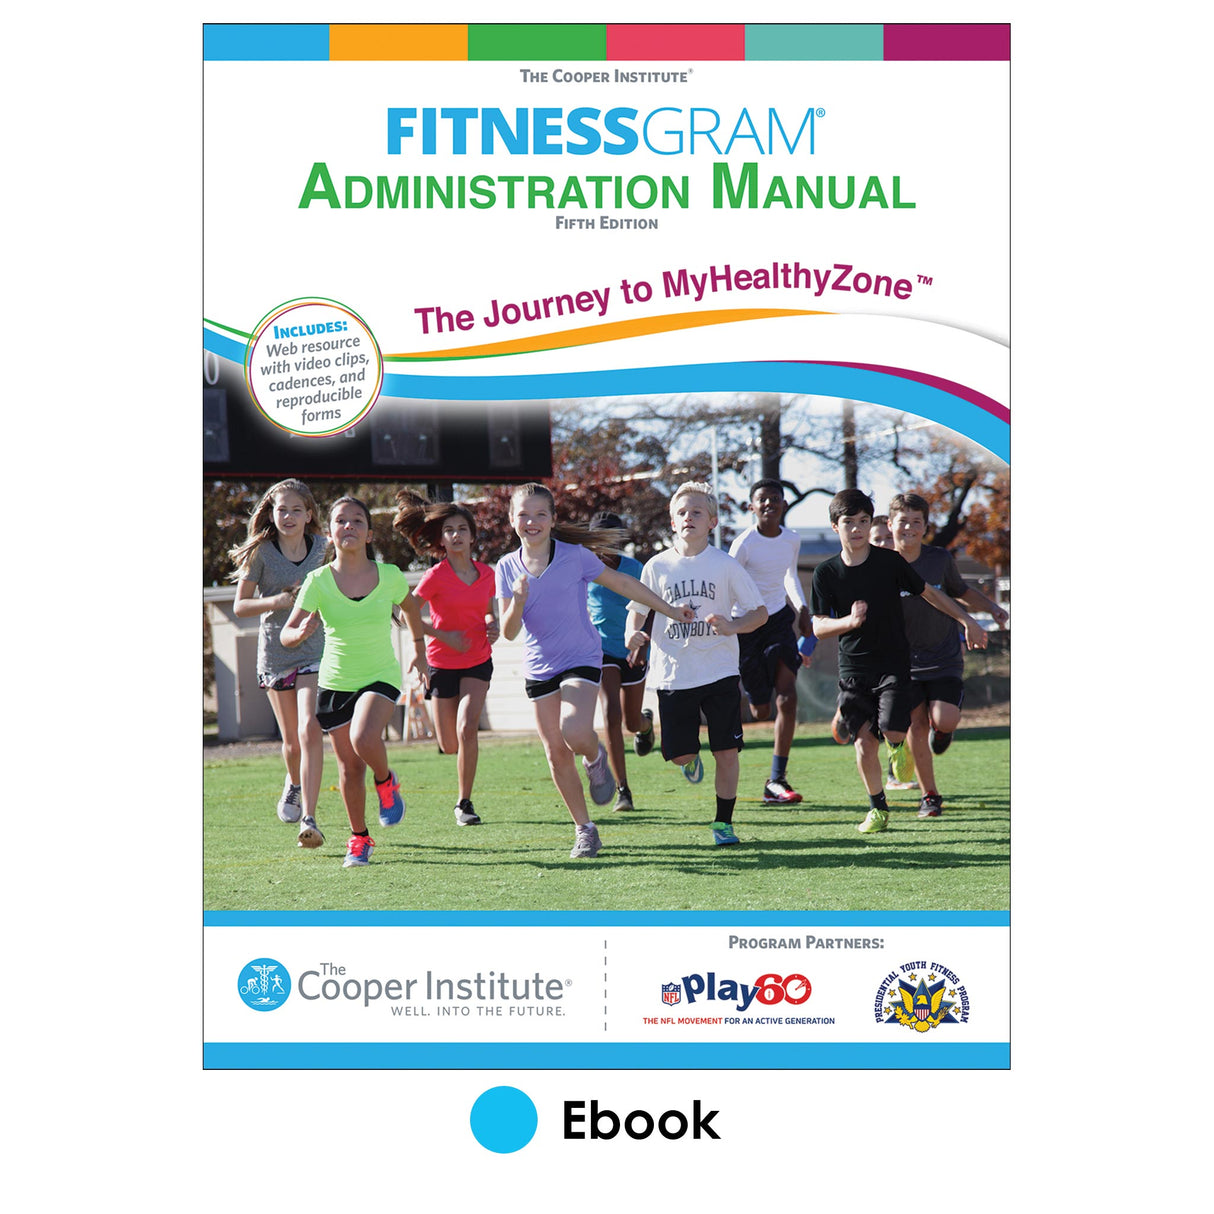 FitnessGram Administration Manual 5th Edition PDF